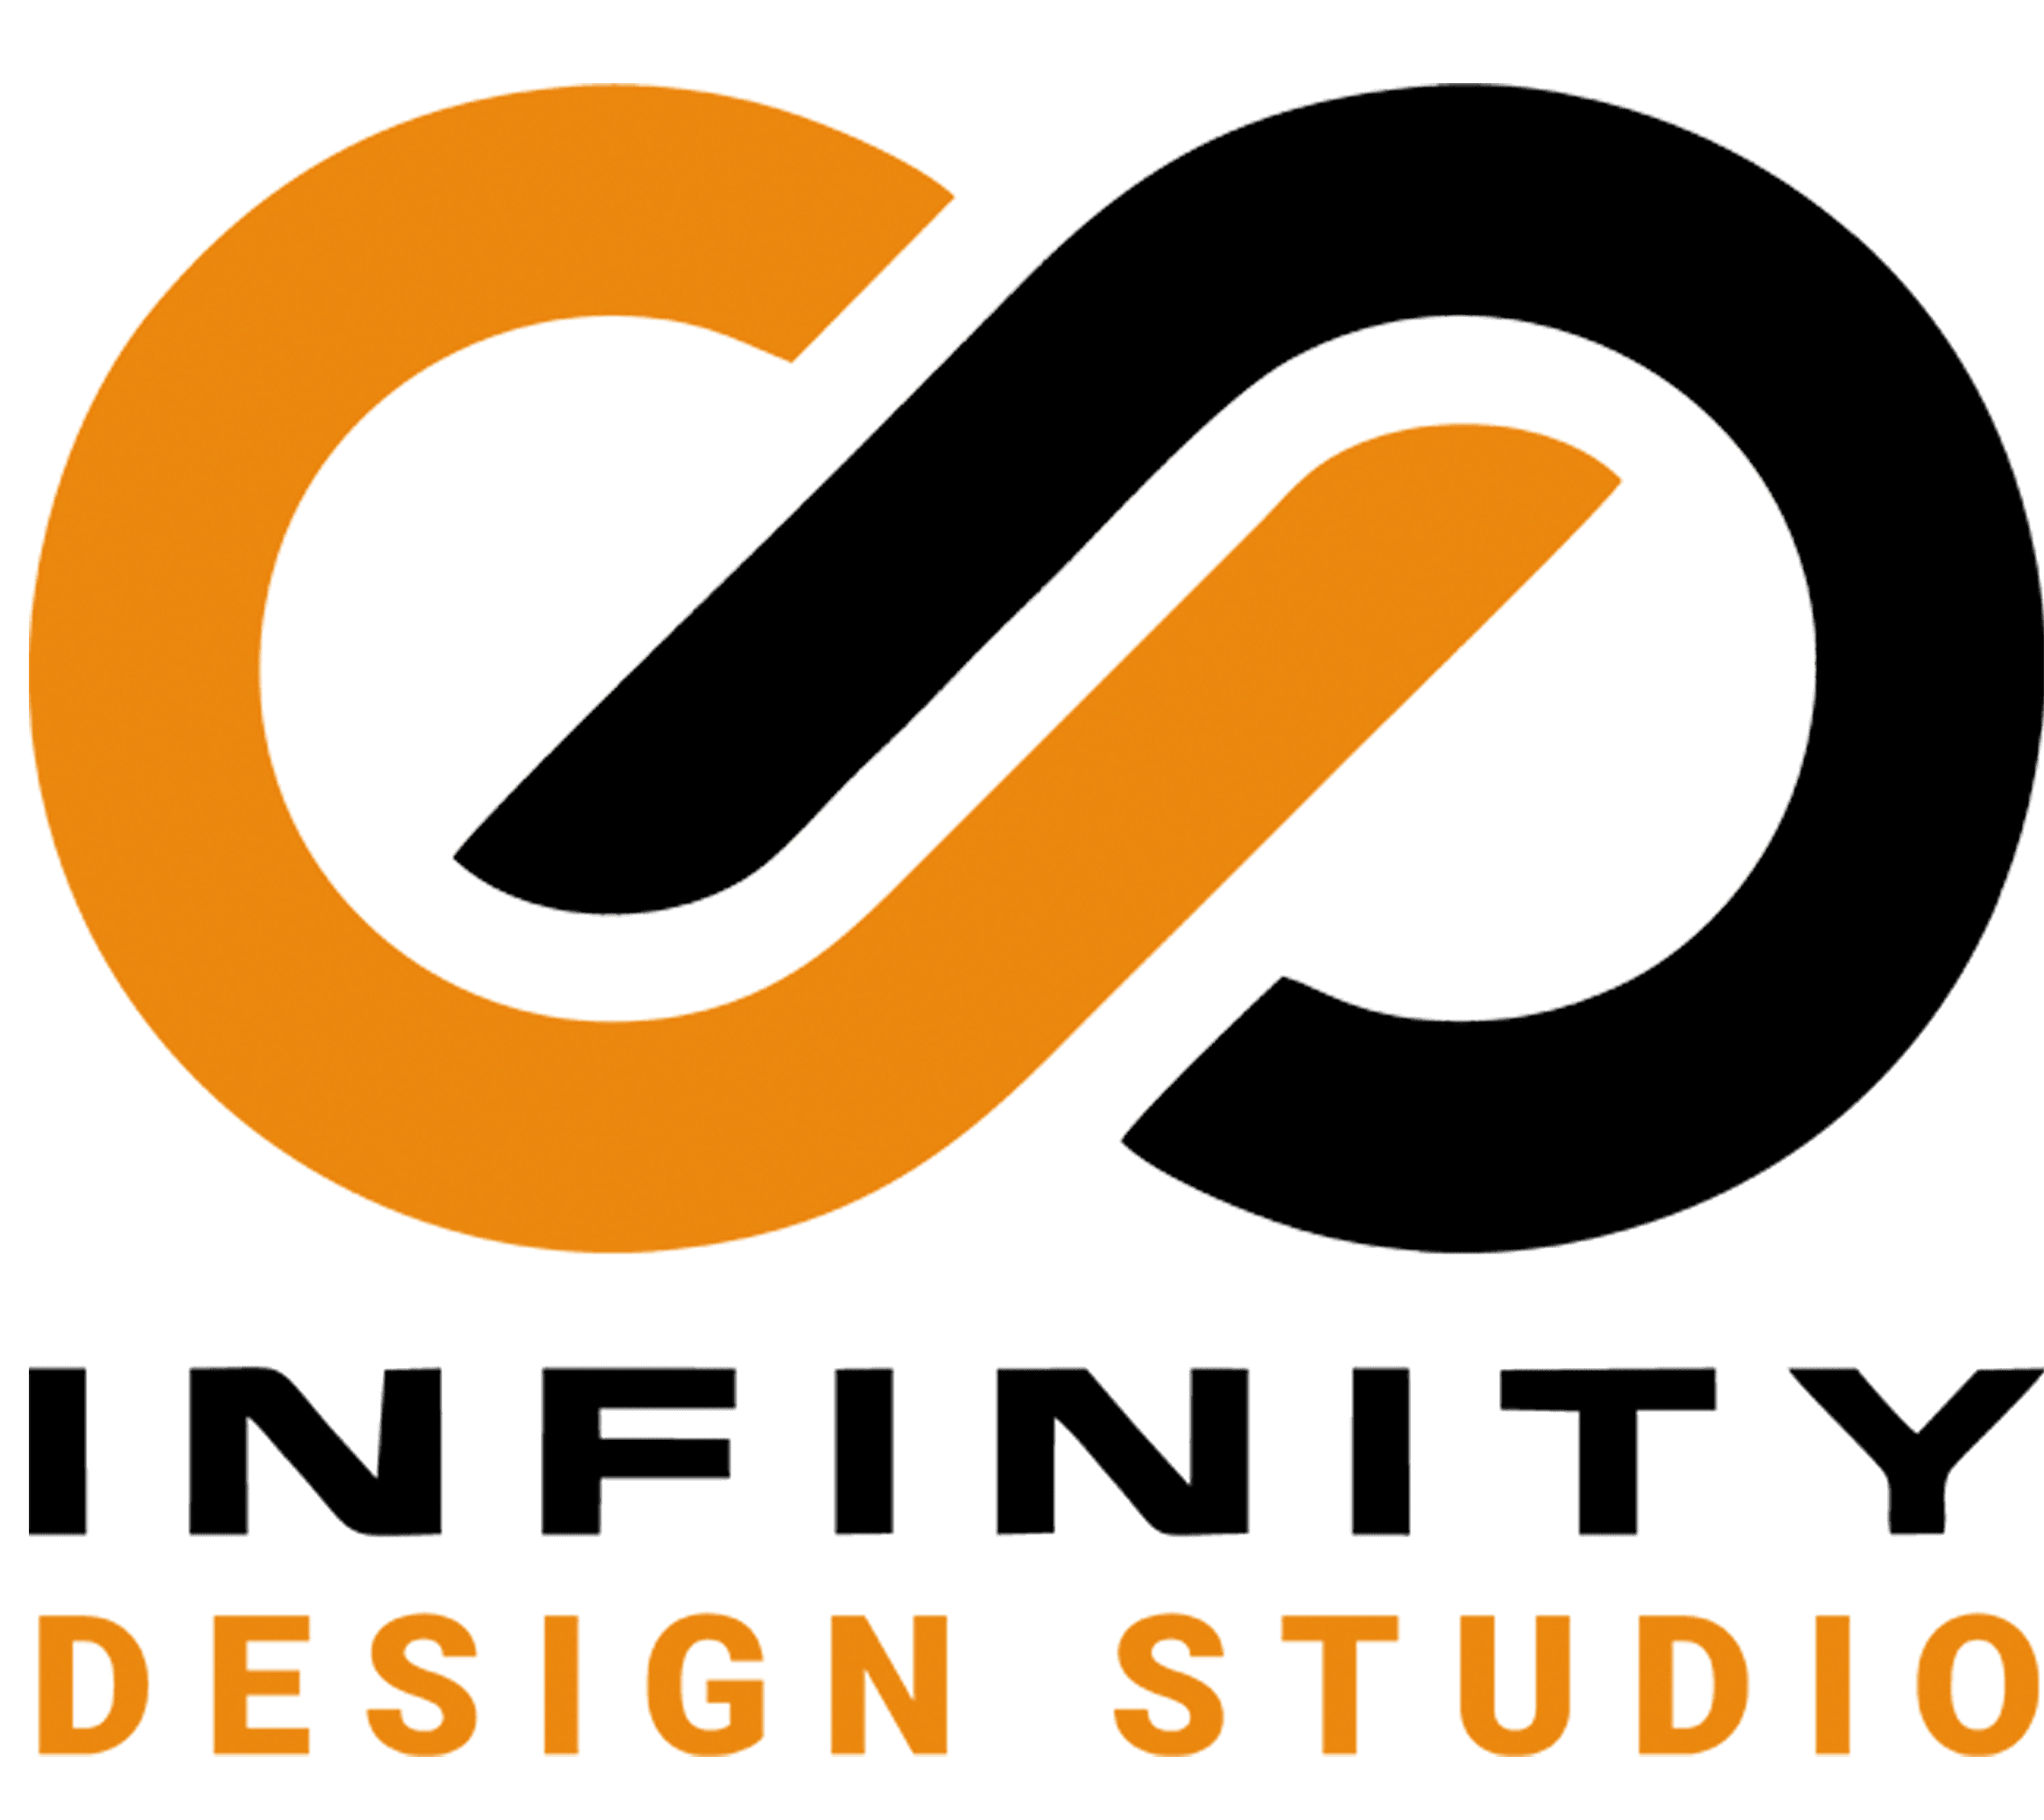 Infinity Design Studio